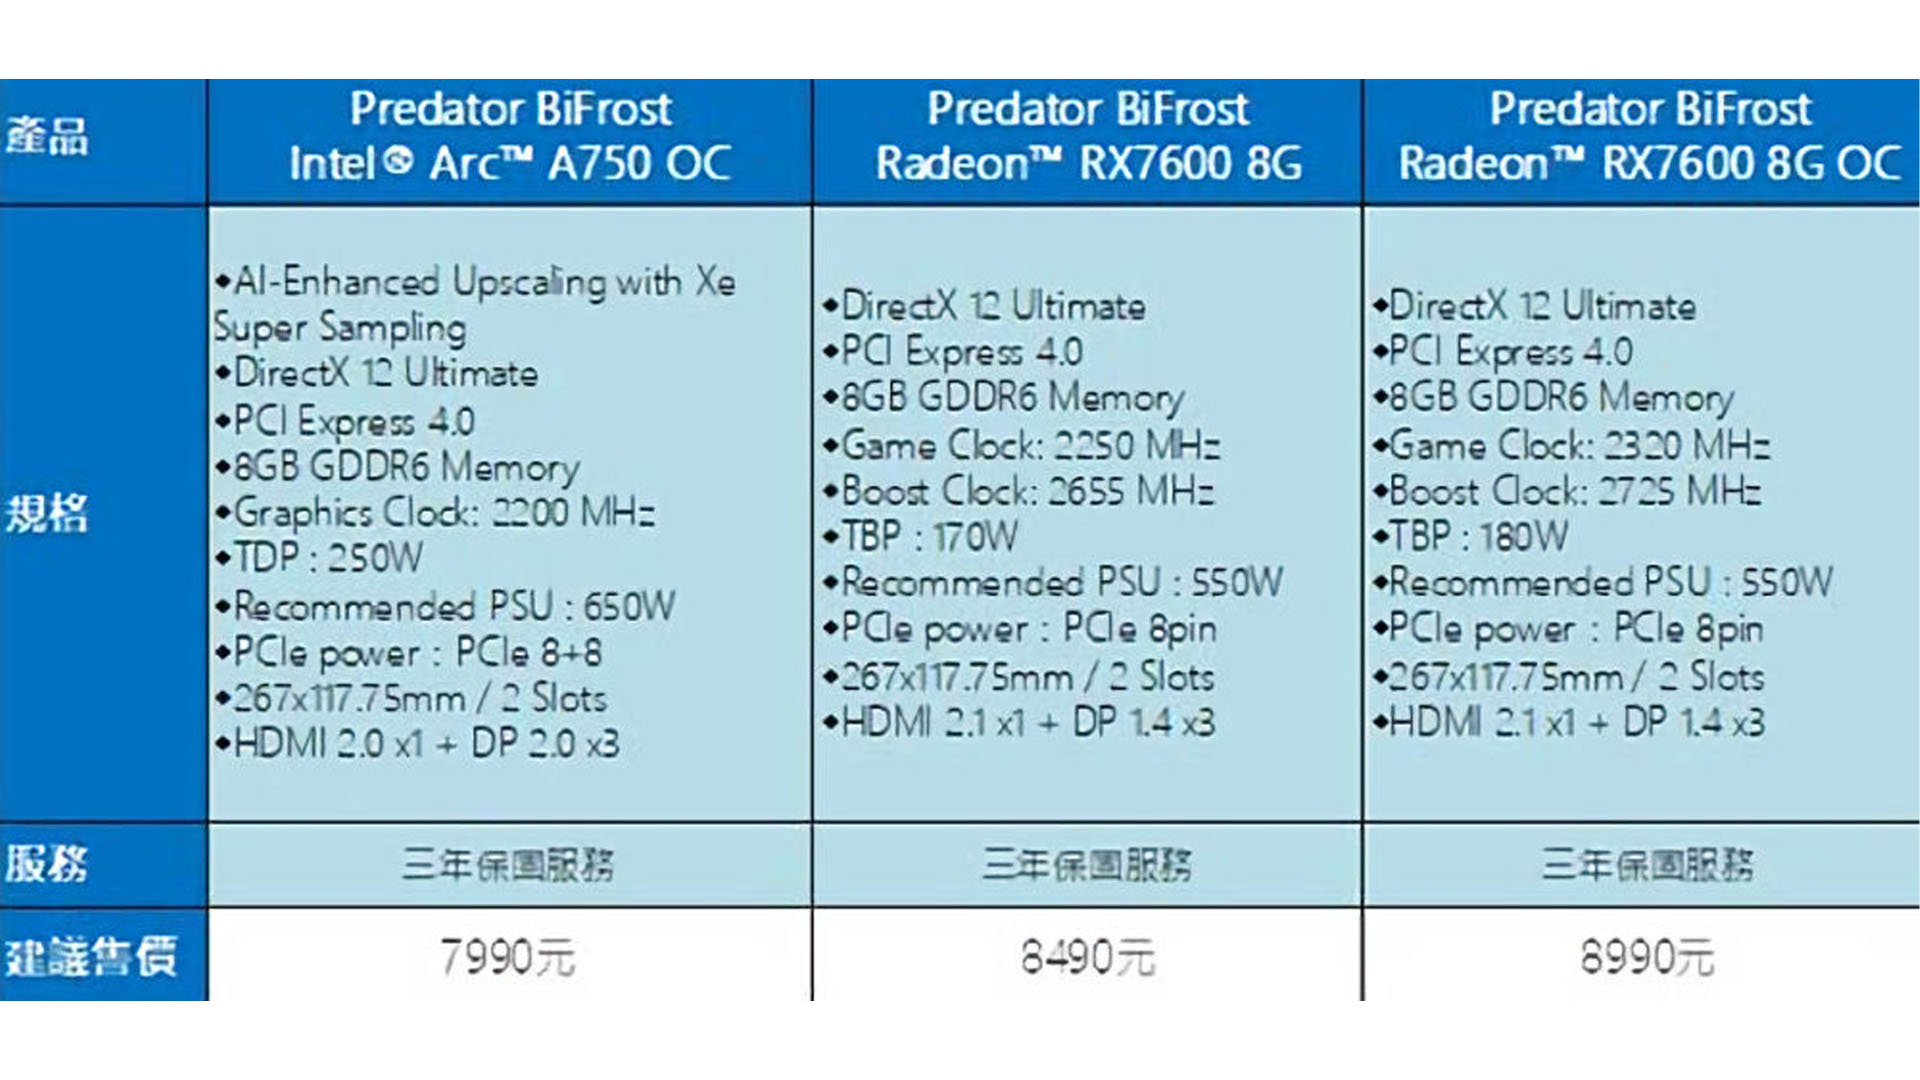 Acer AMD BiFrost Radeon RX7600 specs